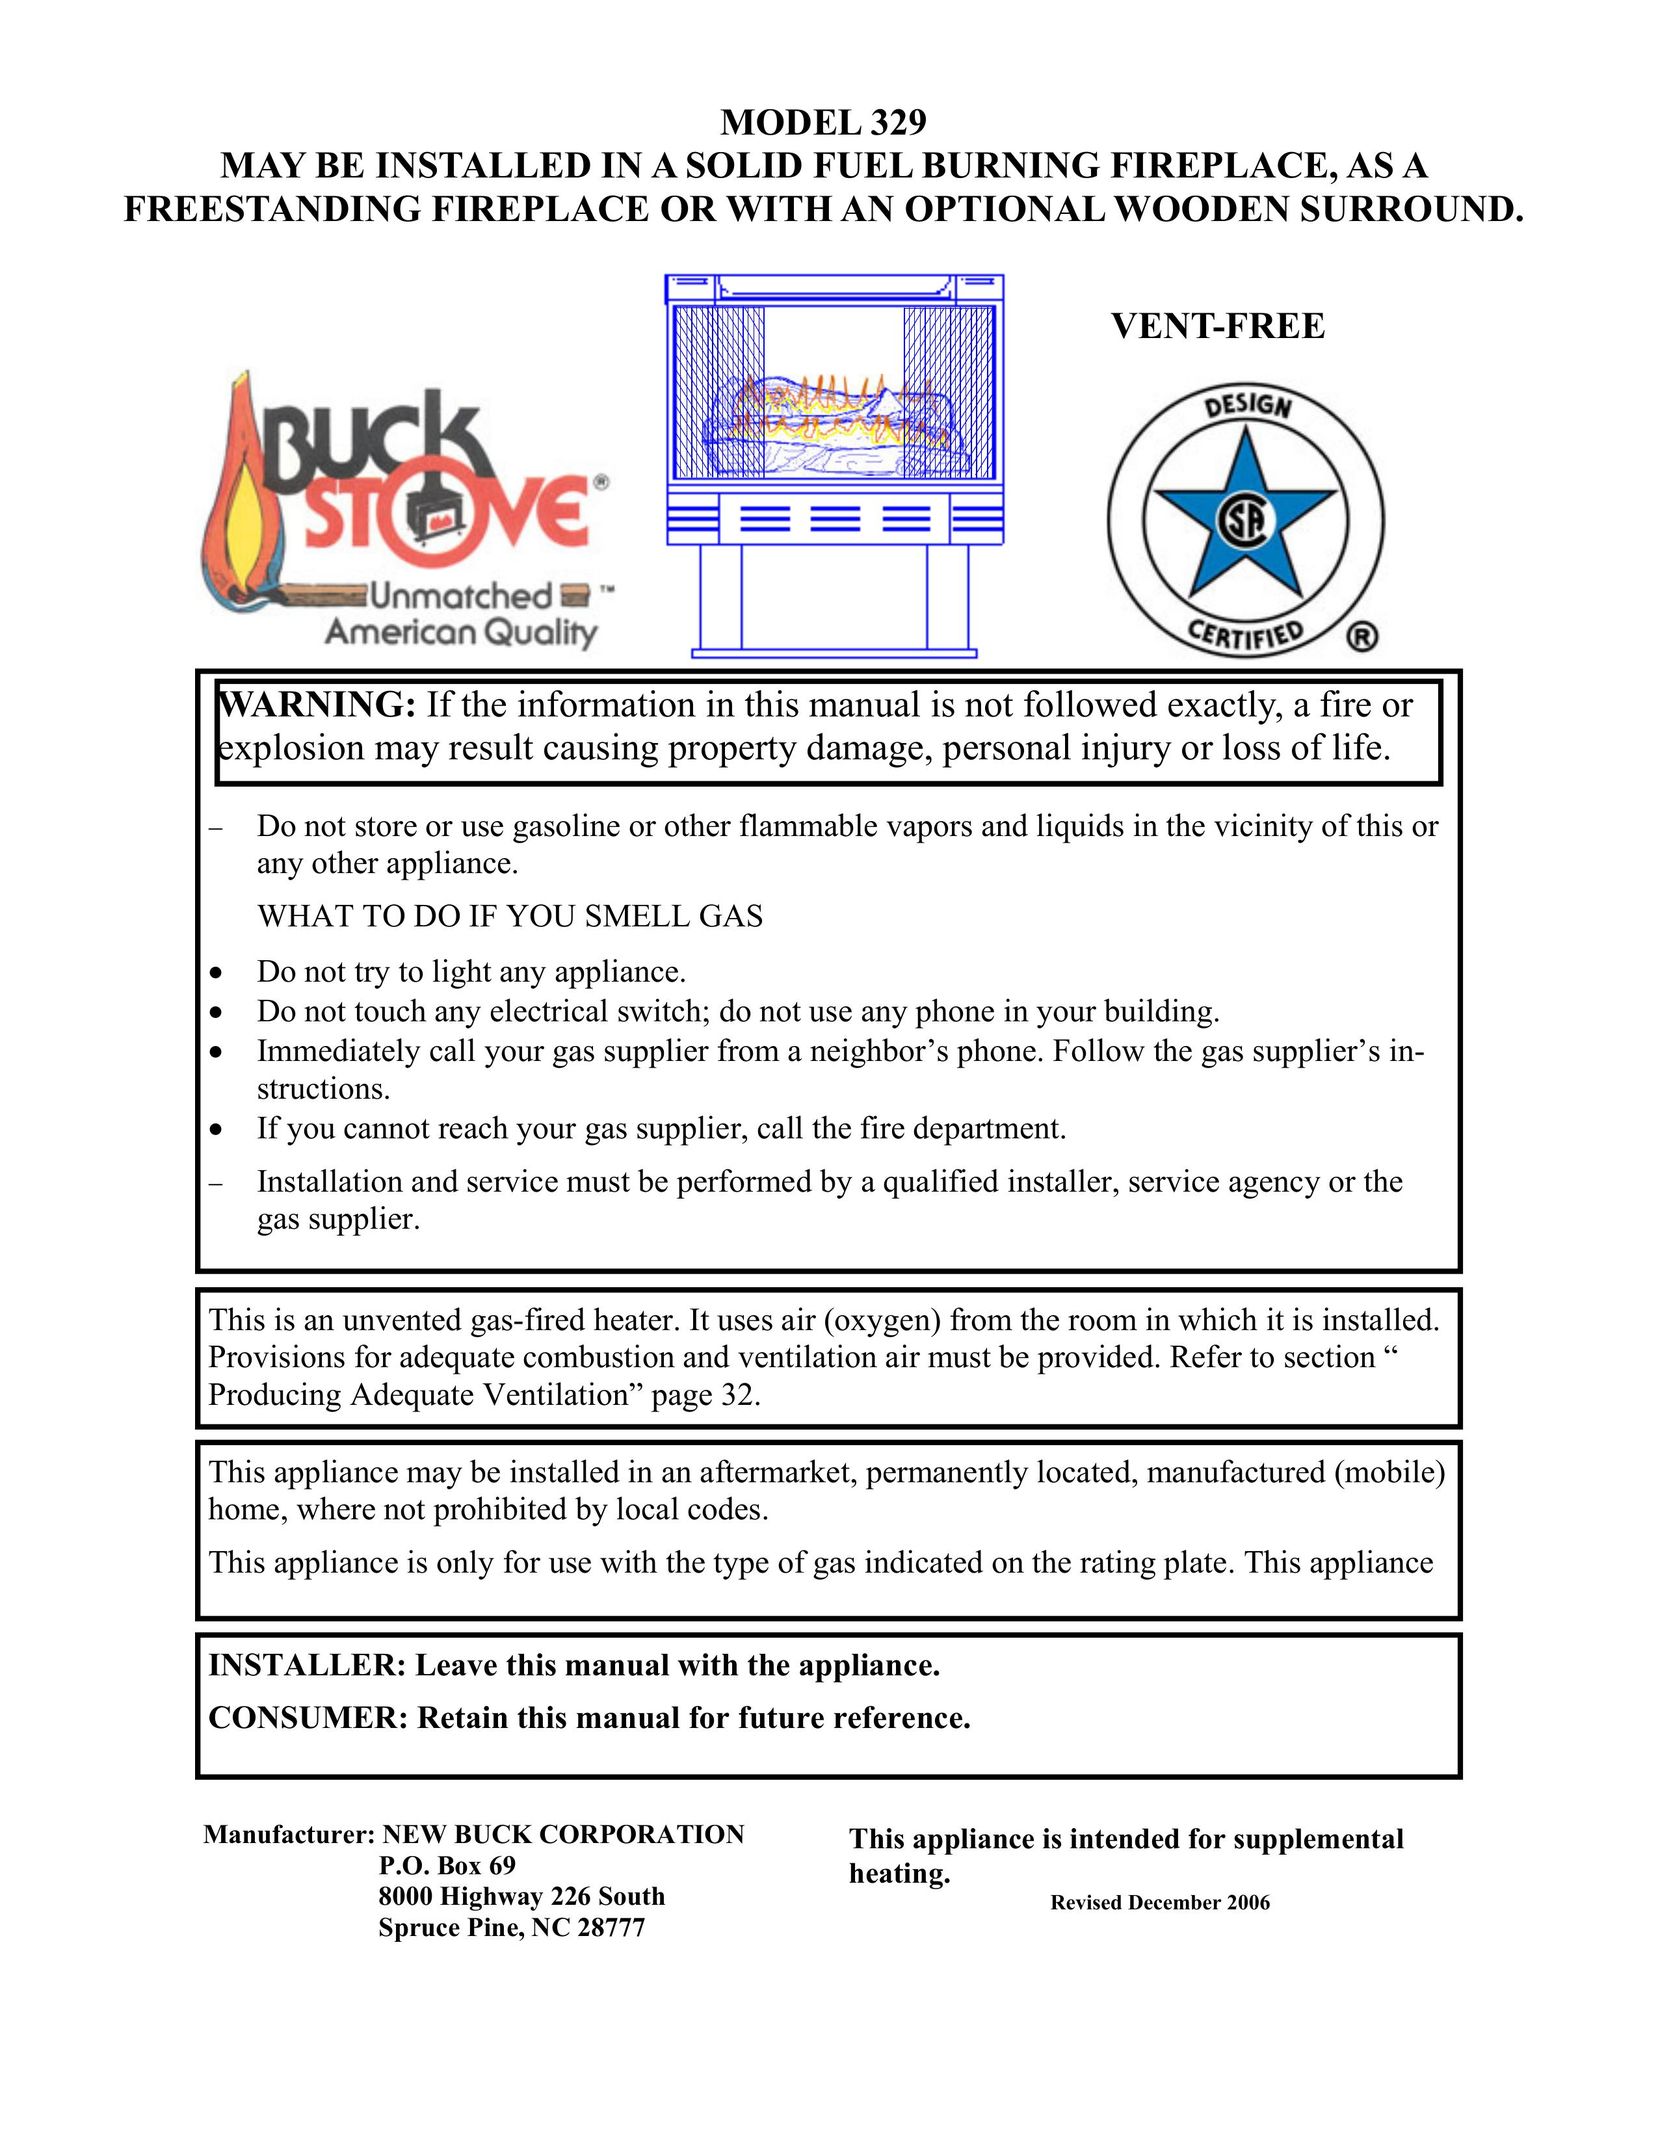 New Buck Corporation 329 Indoor Fireplace User Manual